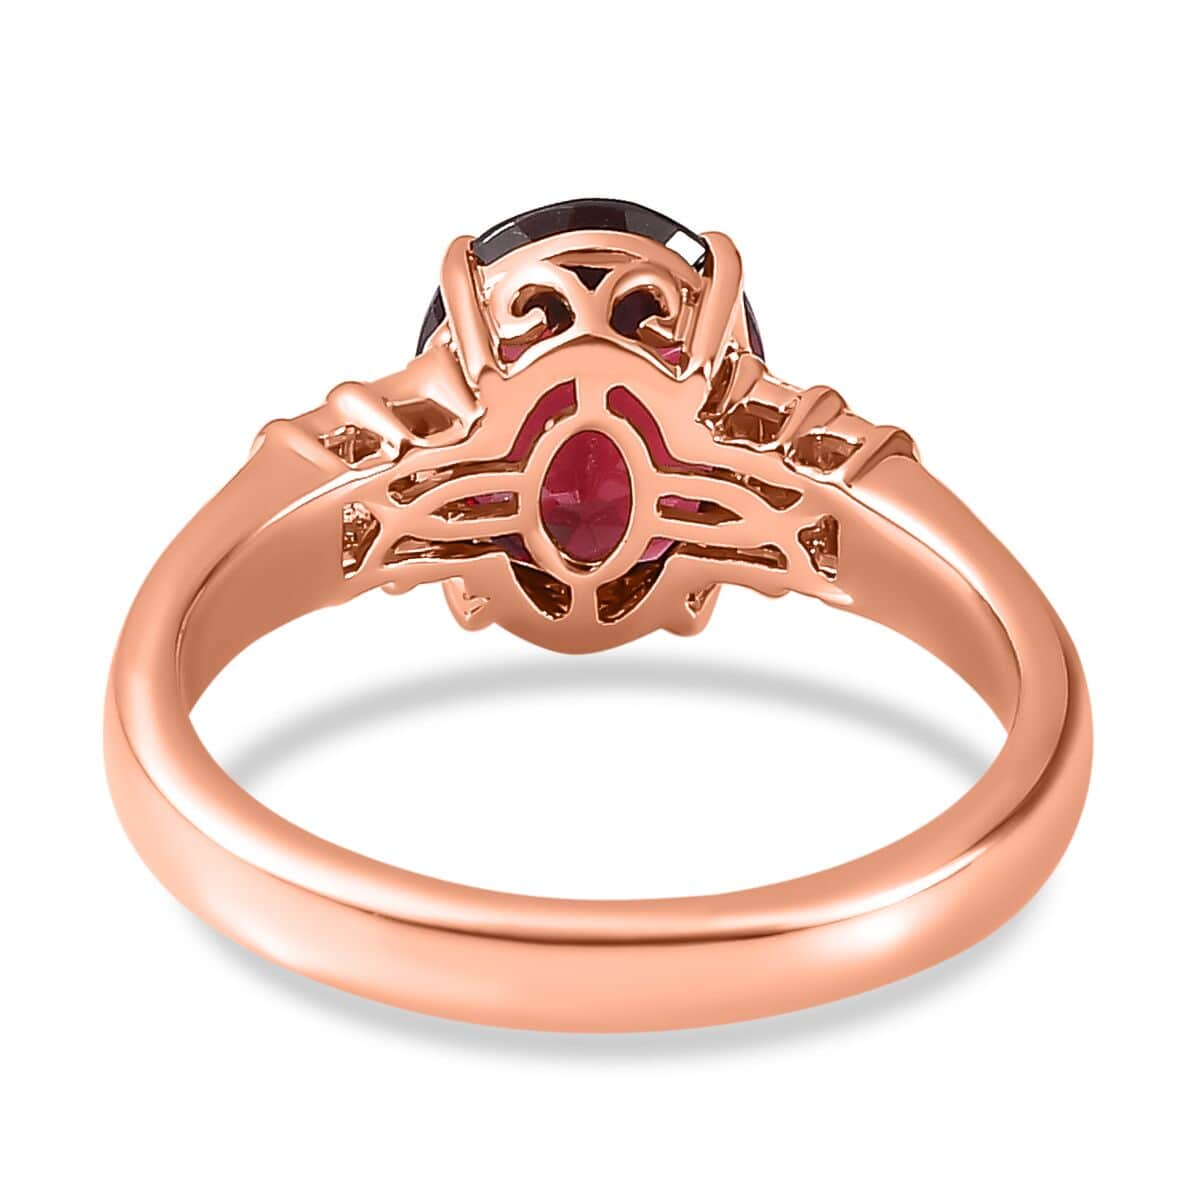 Luxoro 10K Rose Gold Premium Orissa Rhodolite Garnet and G-H I2 Diamond Statement Ring (Size 10.0) 3.10 ctw image number 4